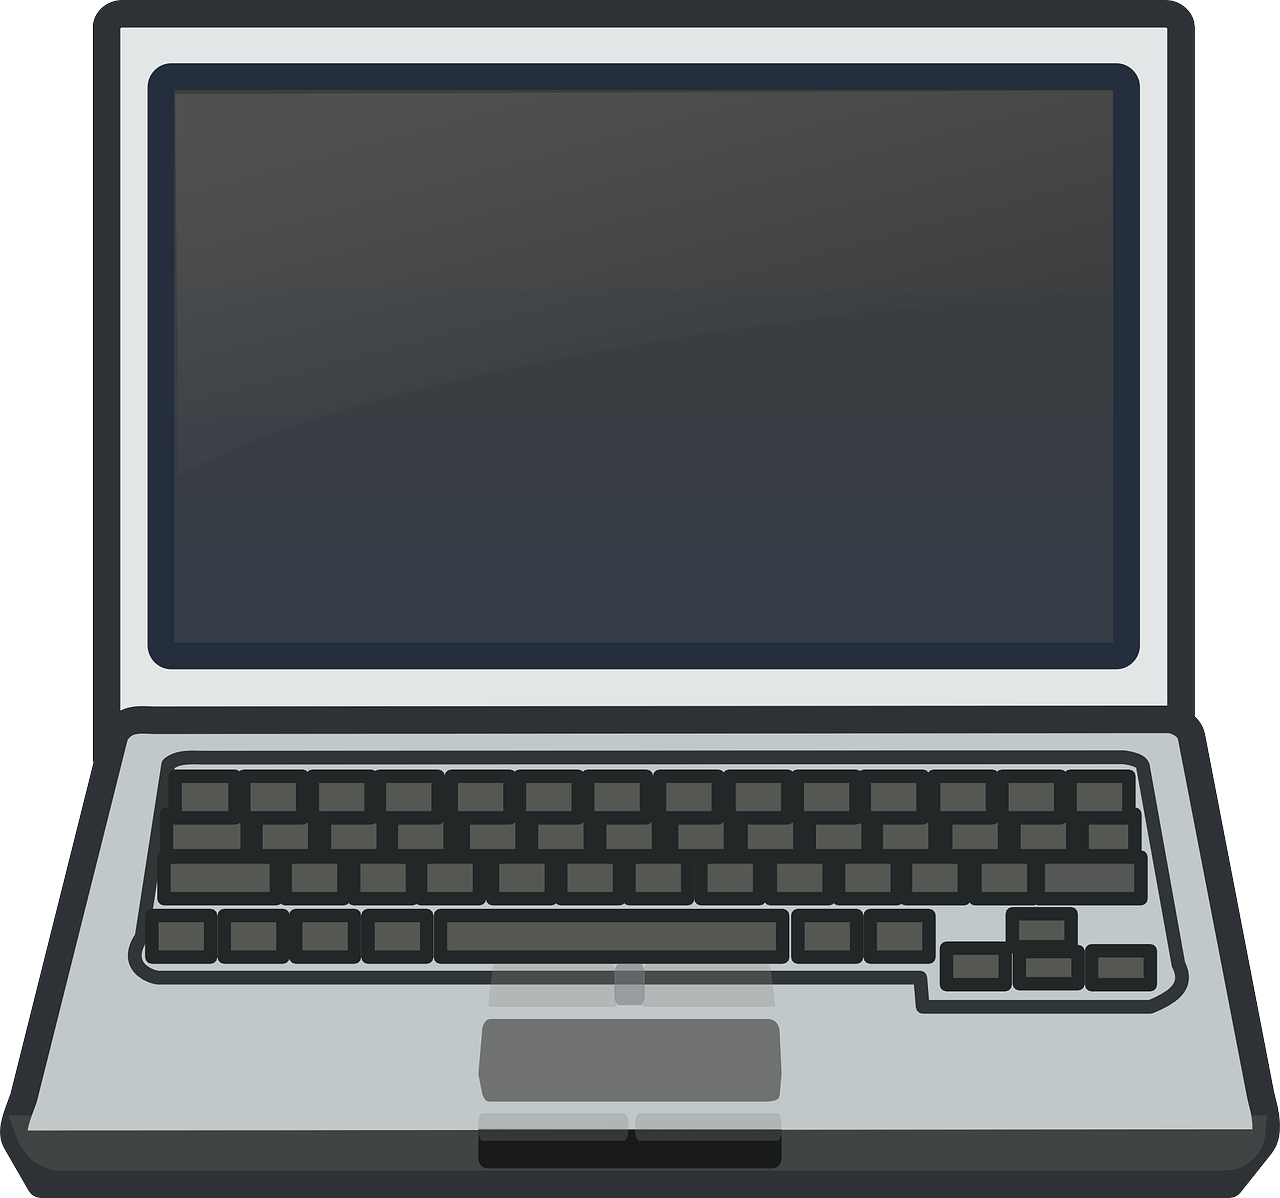 Laptop computer